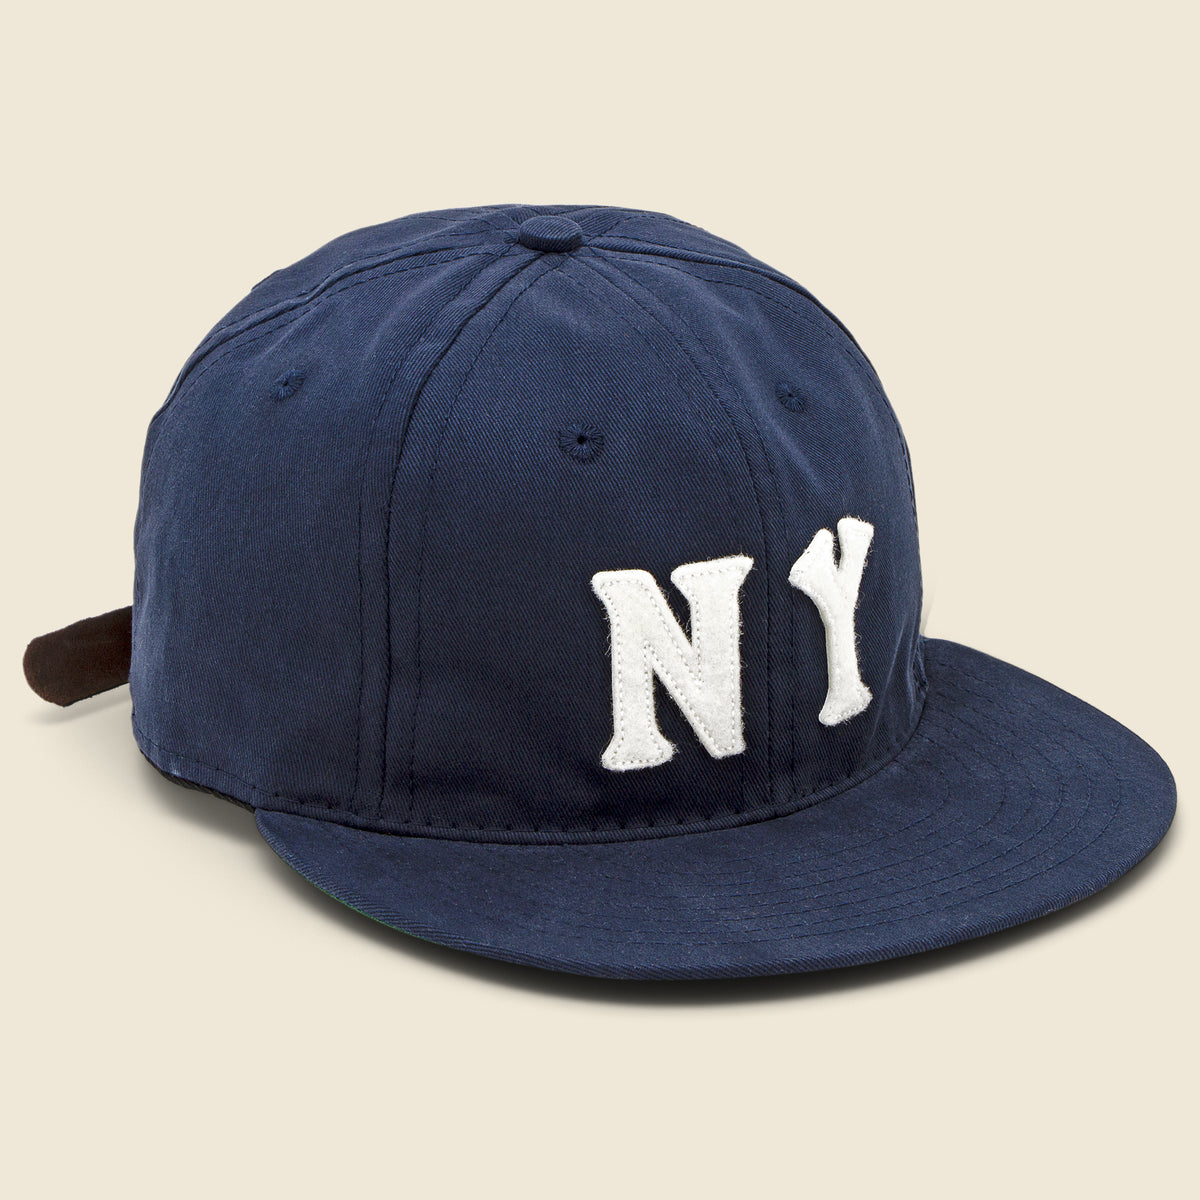 blue yankees hat